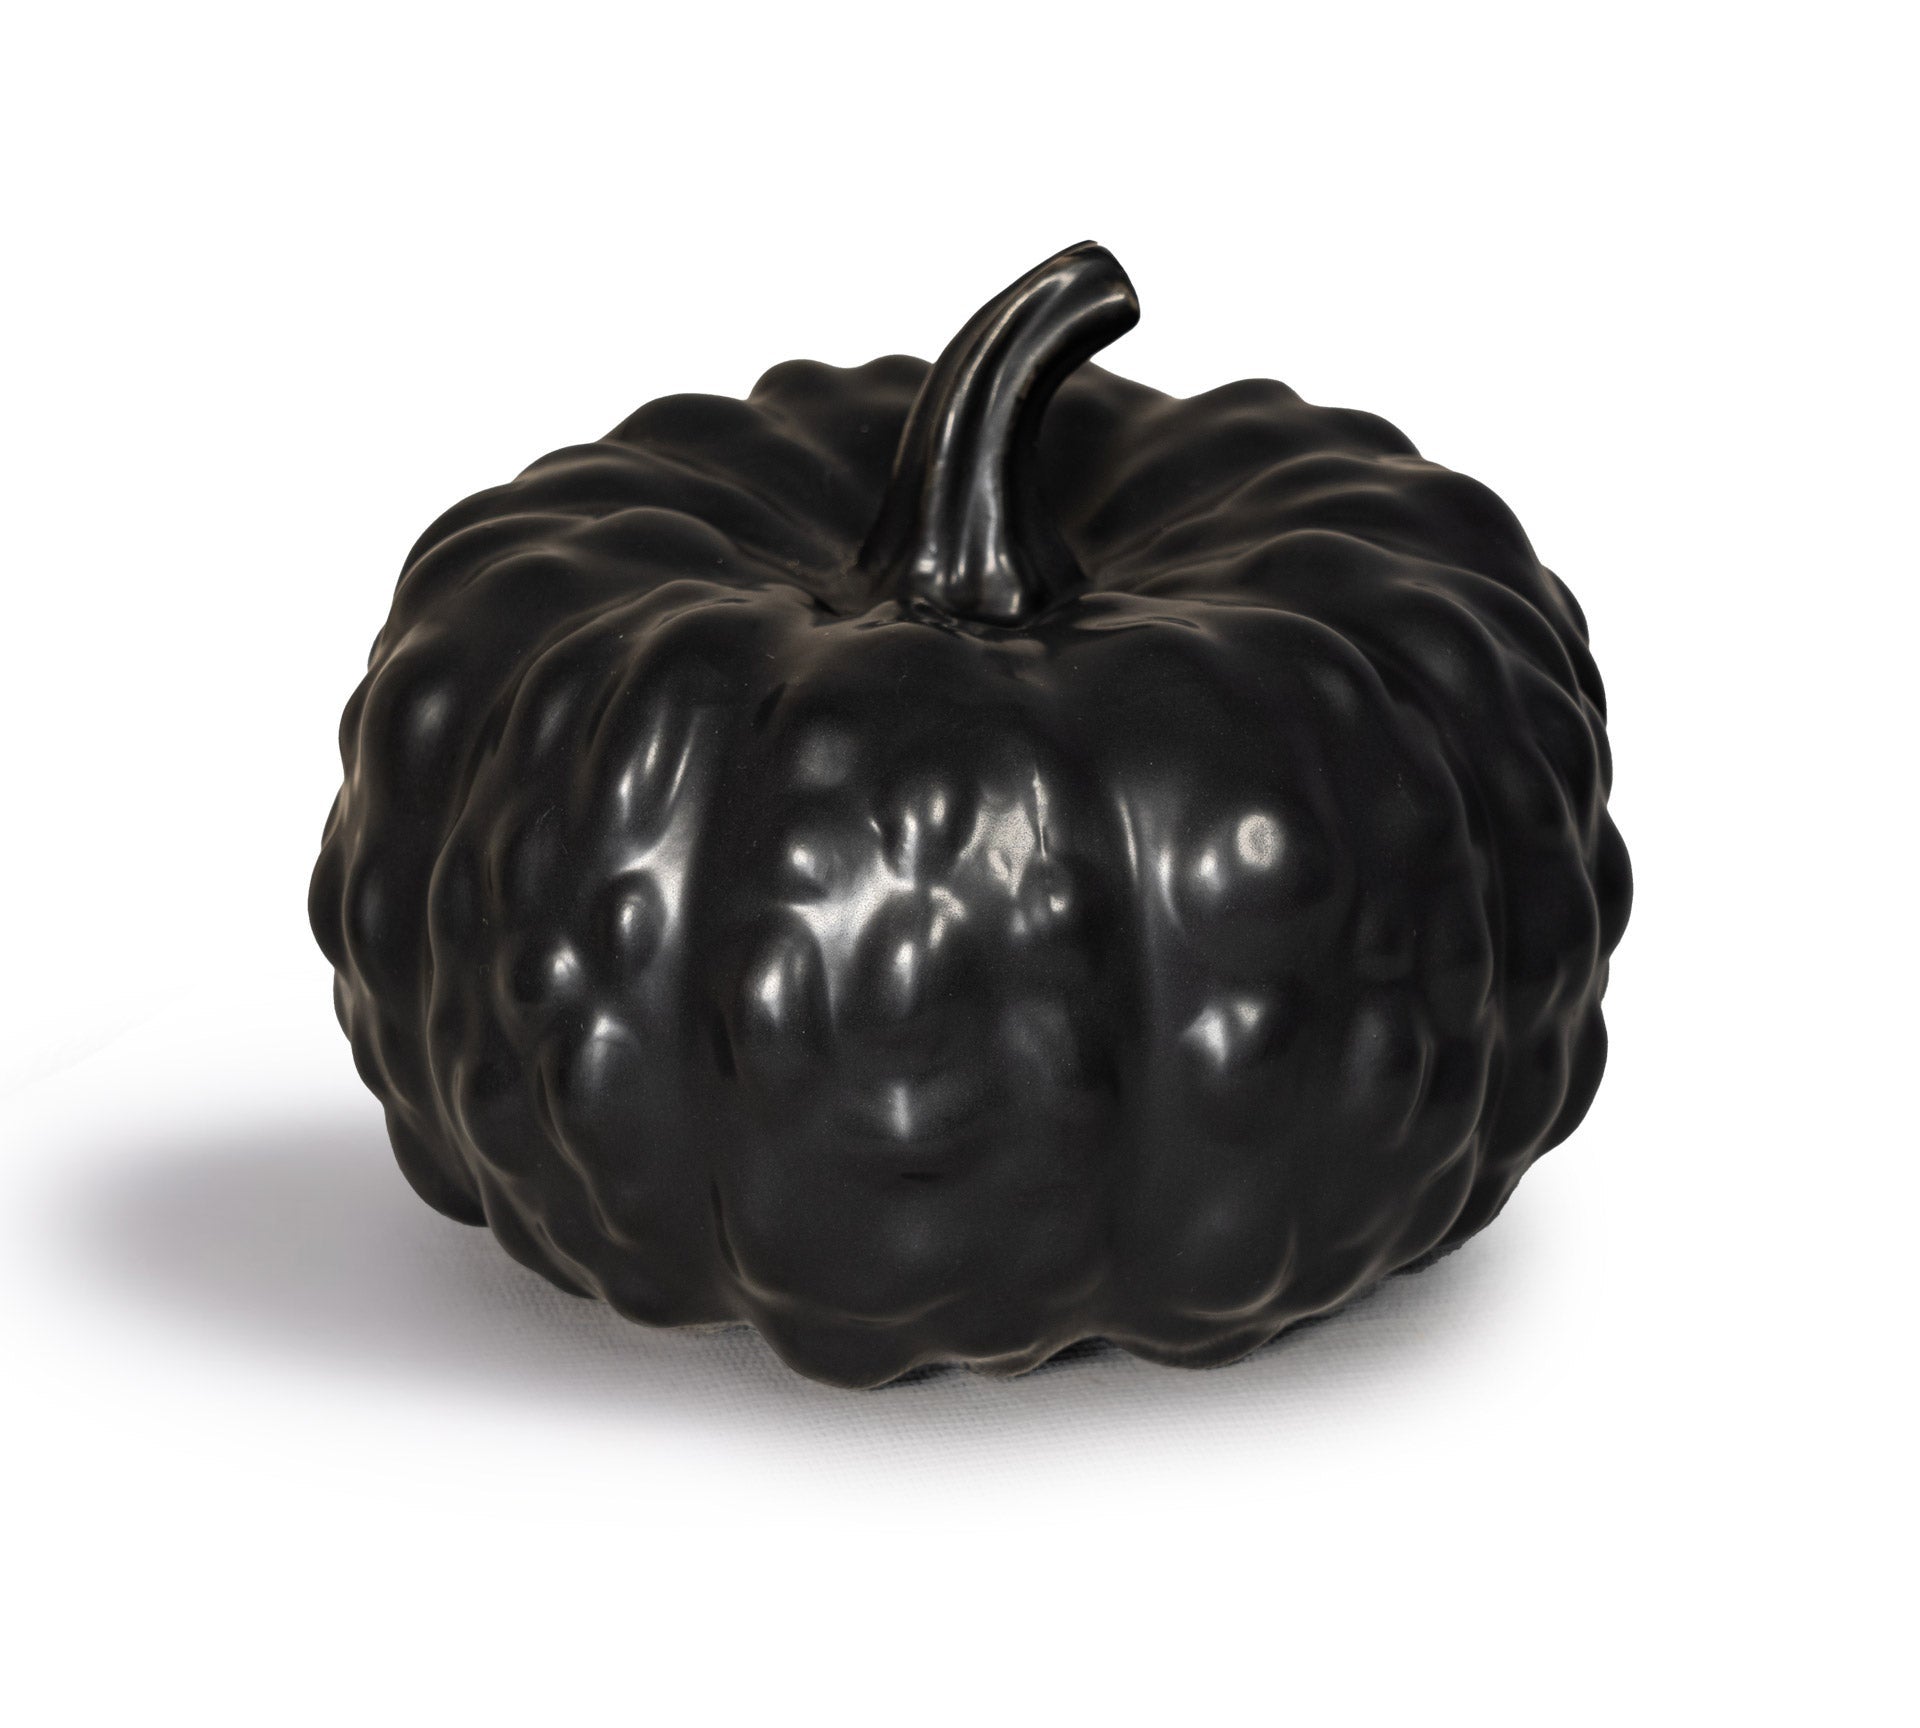 Black Bumpy Pumpkin - Ceramic Set of 2